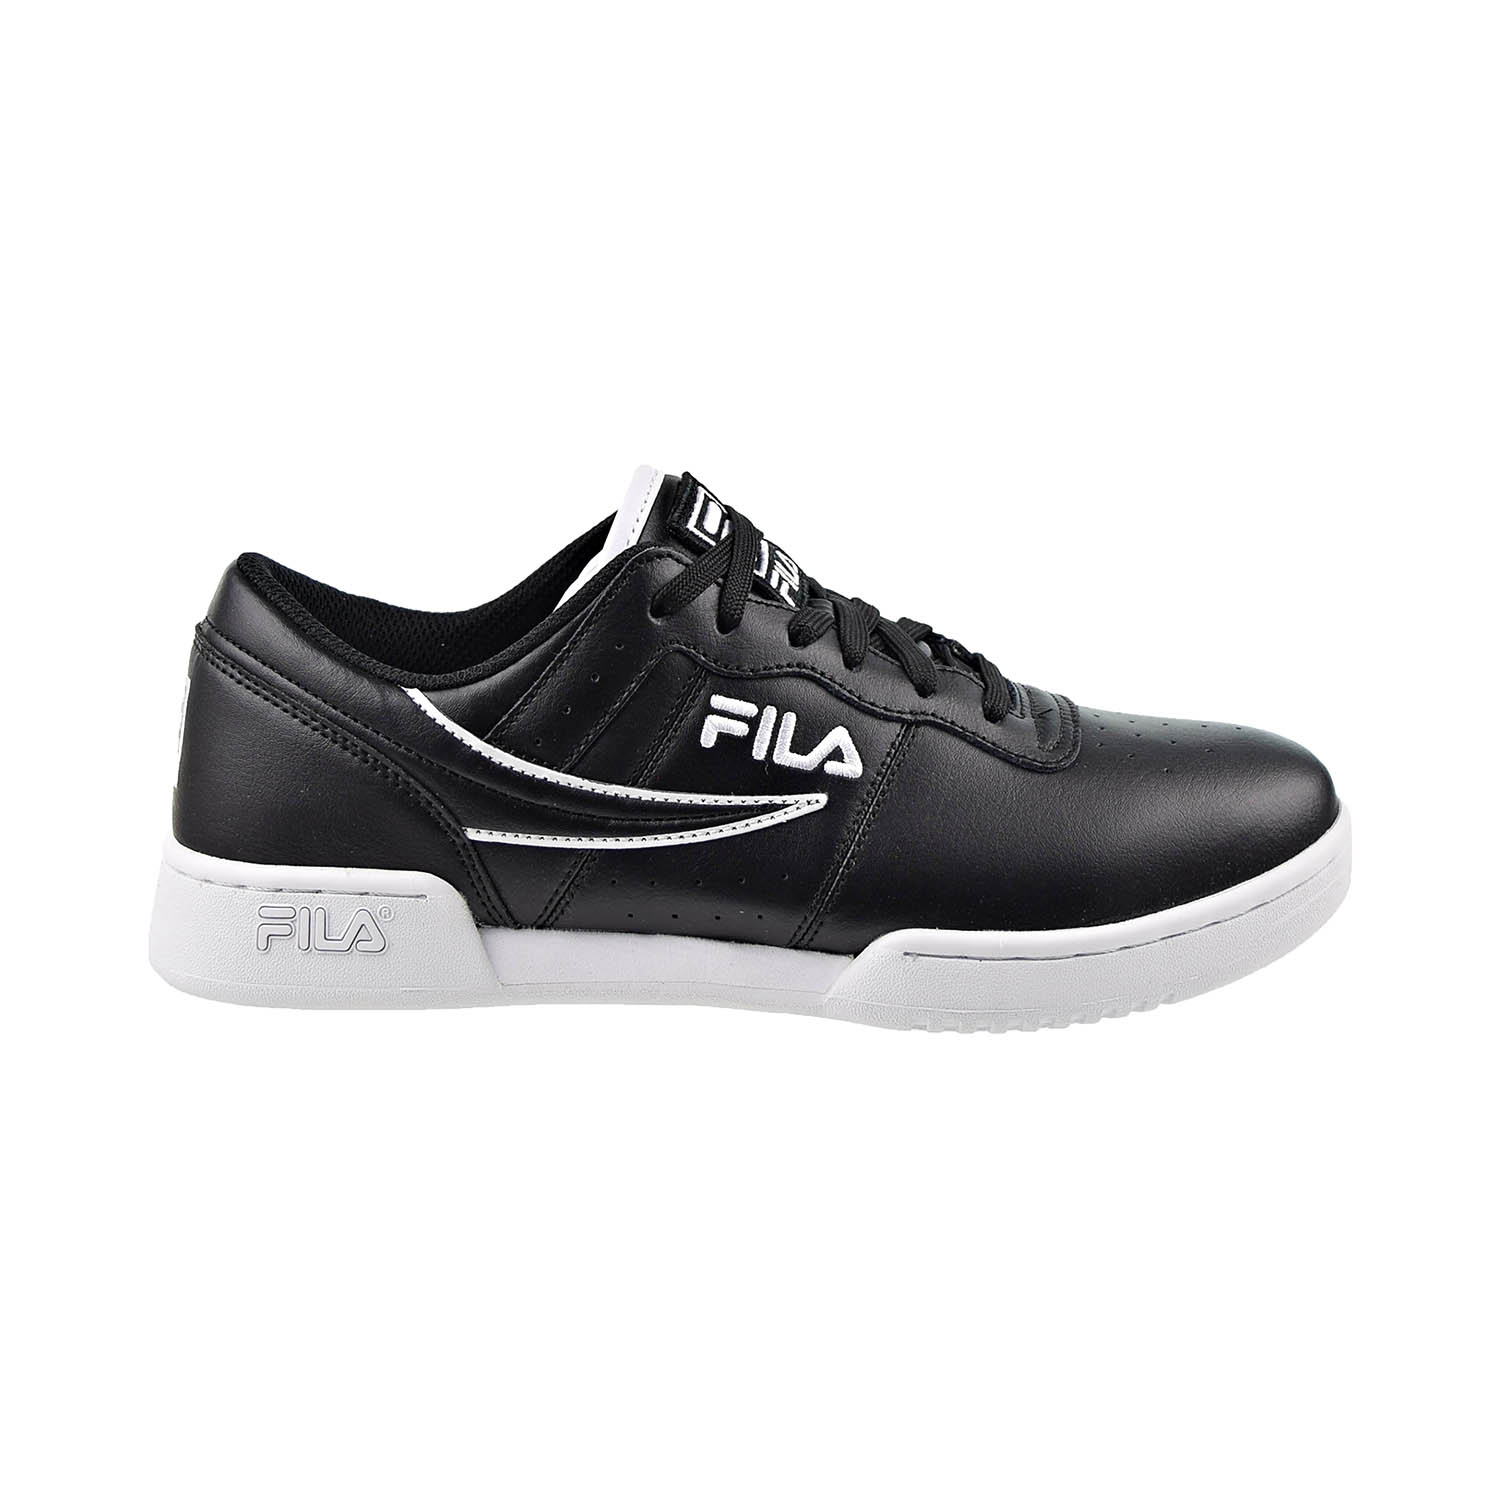 Fila Original Fitness Men's Shoes Black-White 1fm01722-021